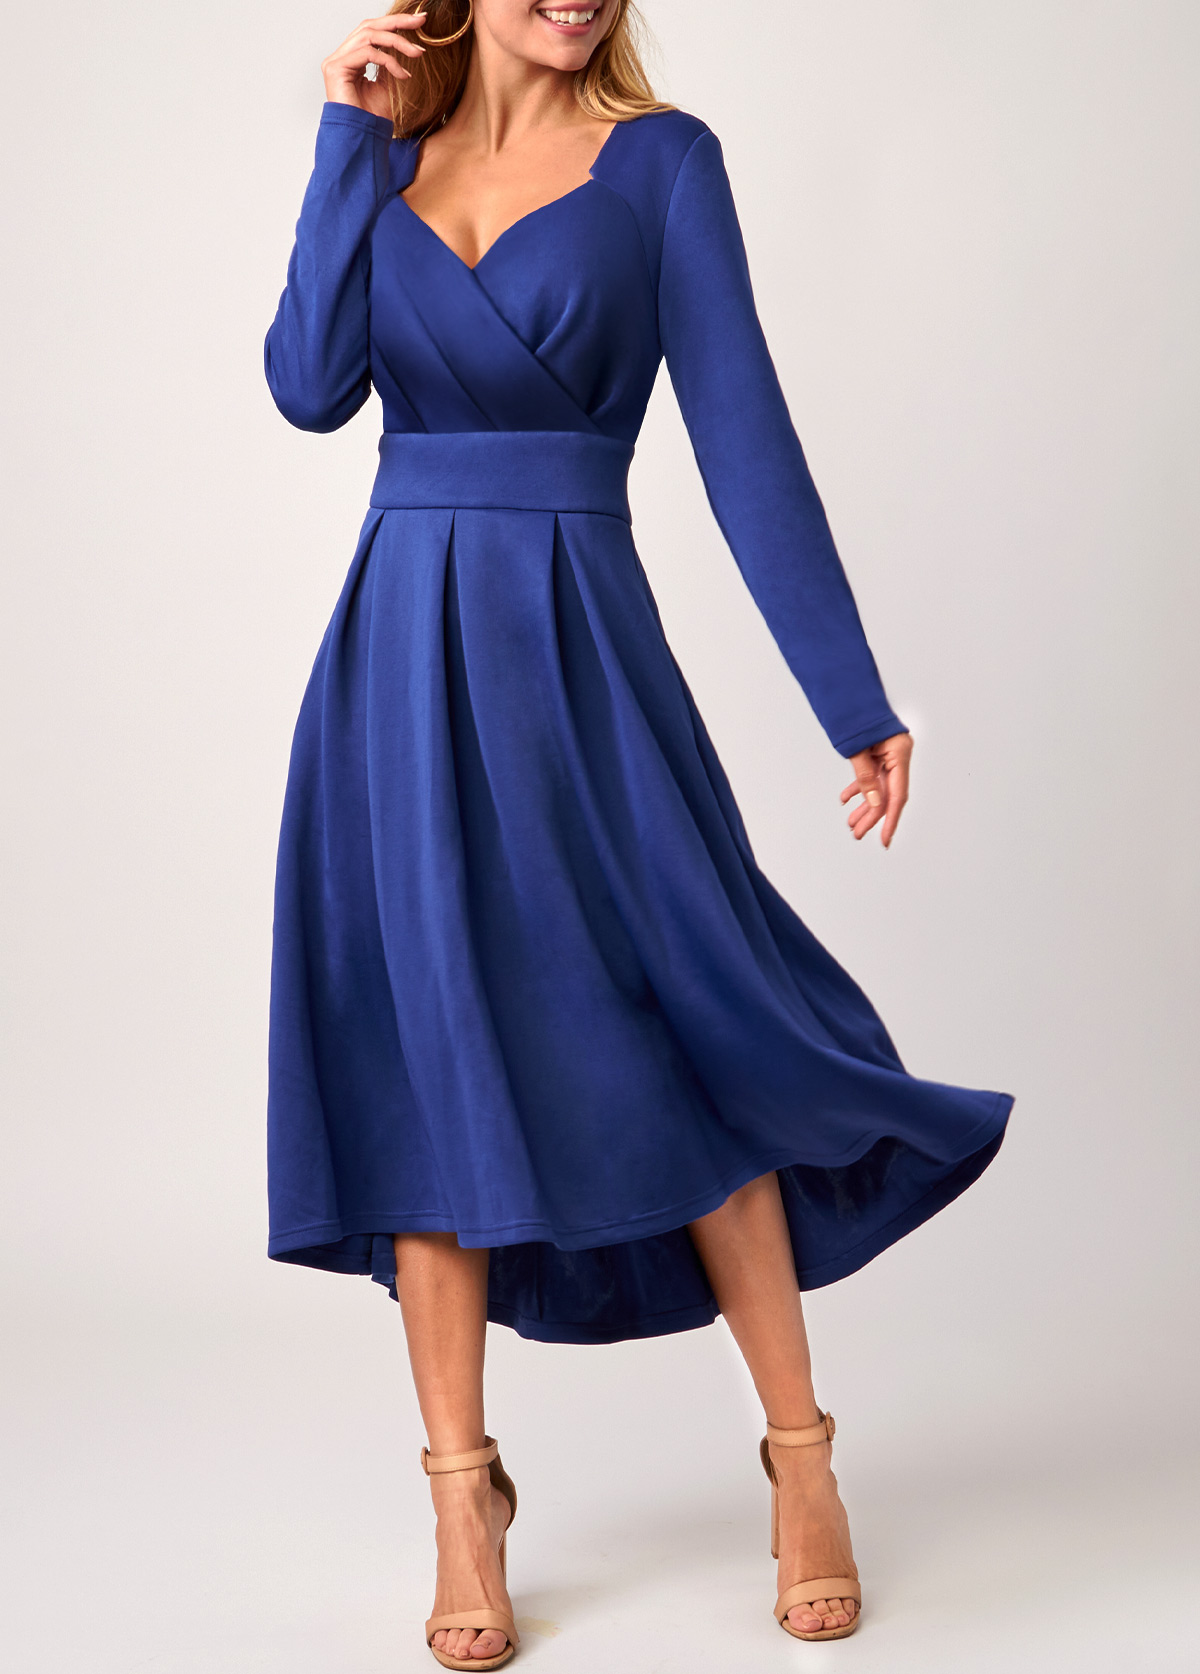 Cross Front Long Sleeve Royal Blue Dress